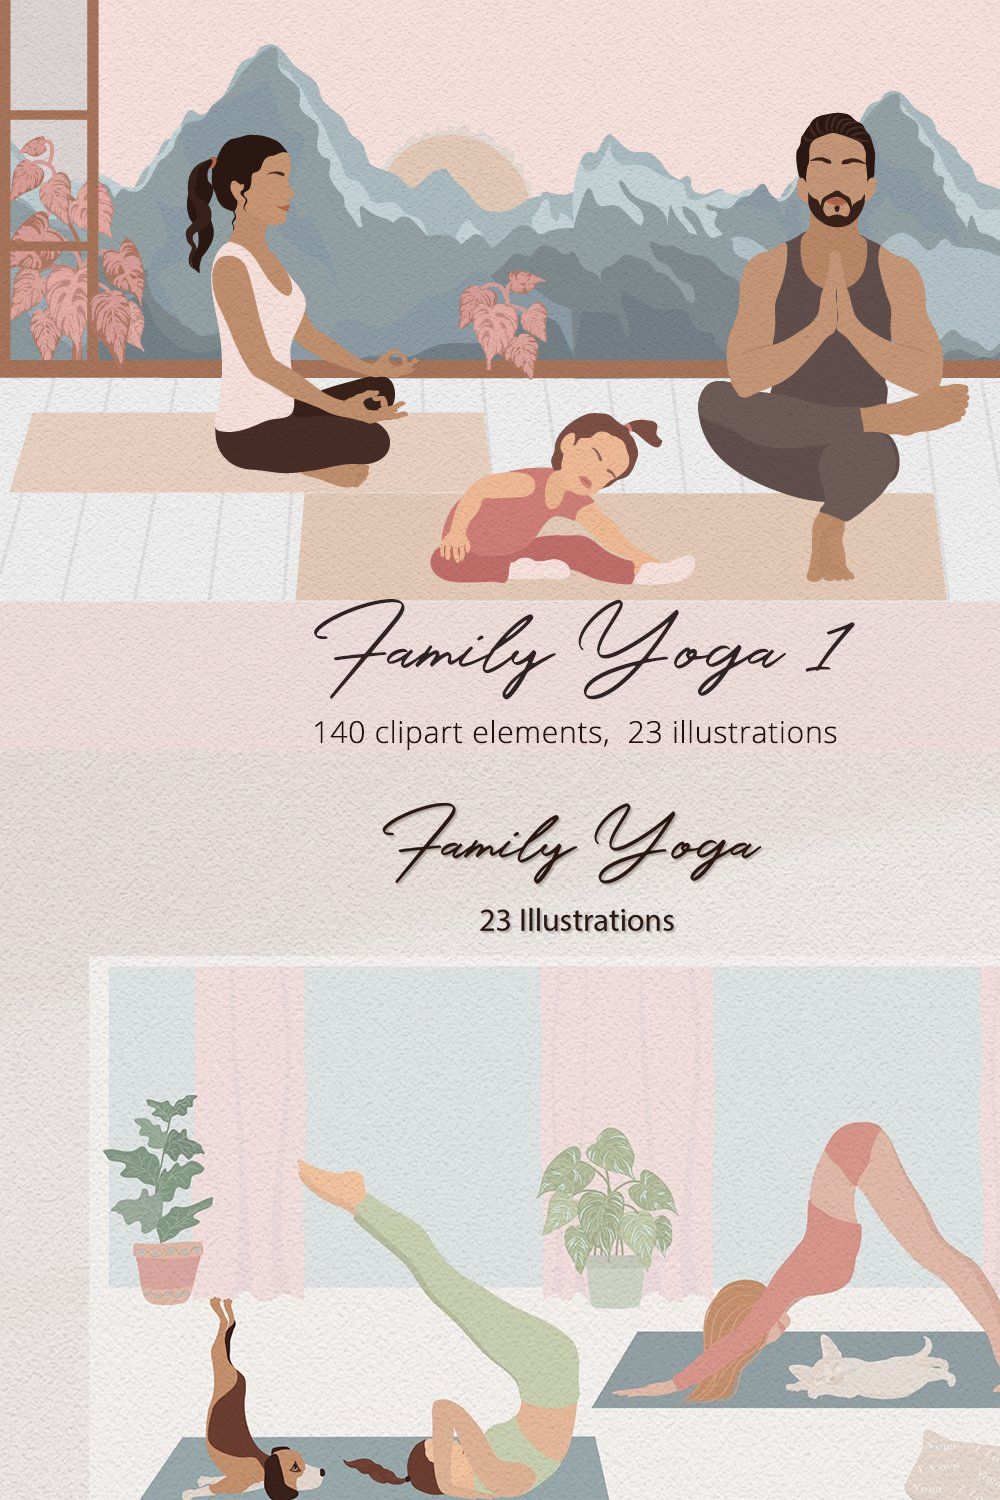 Family Yoga 1 Illustration Set pinterest preview image.